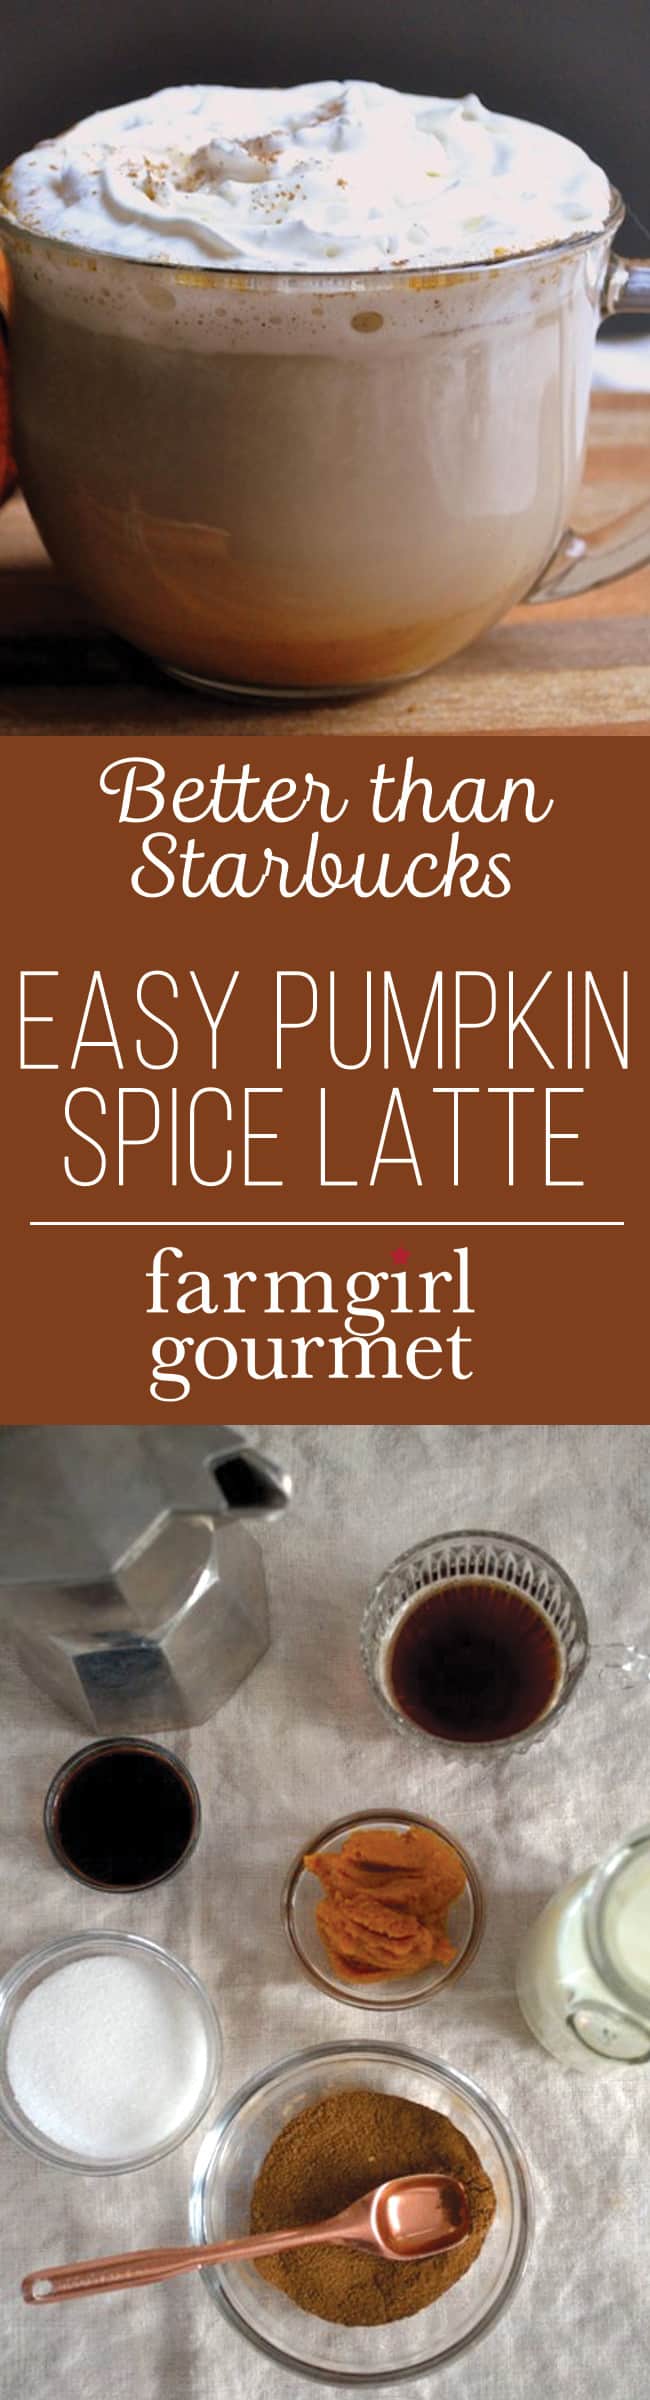 DIY Pumpkin Spice Latte | farmgirlgourmet.com